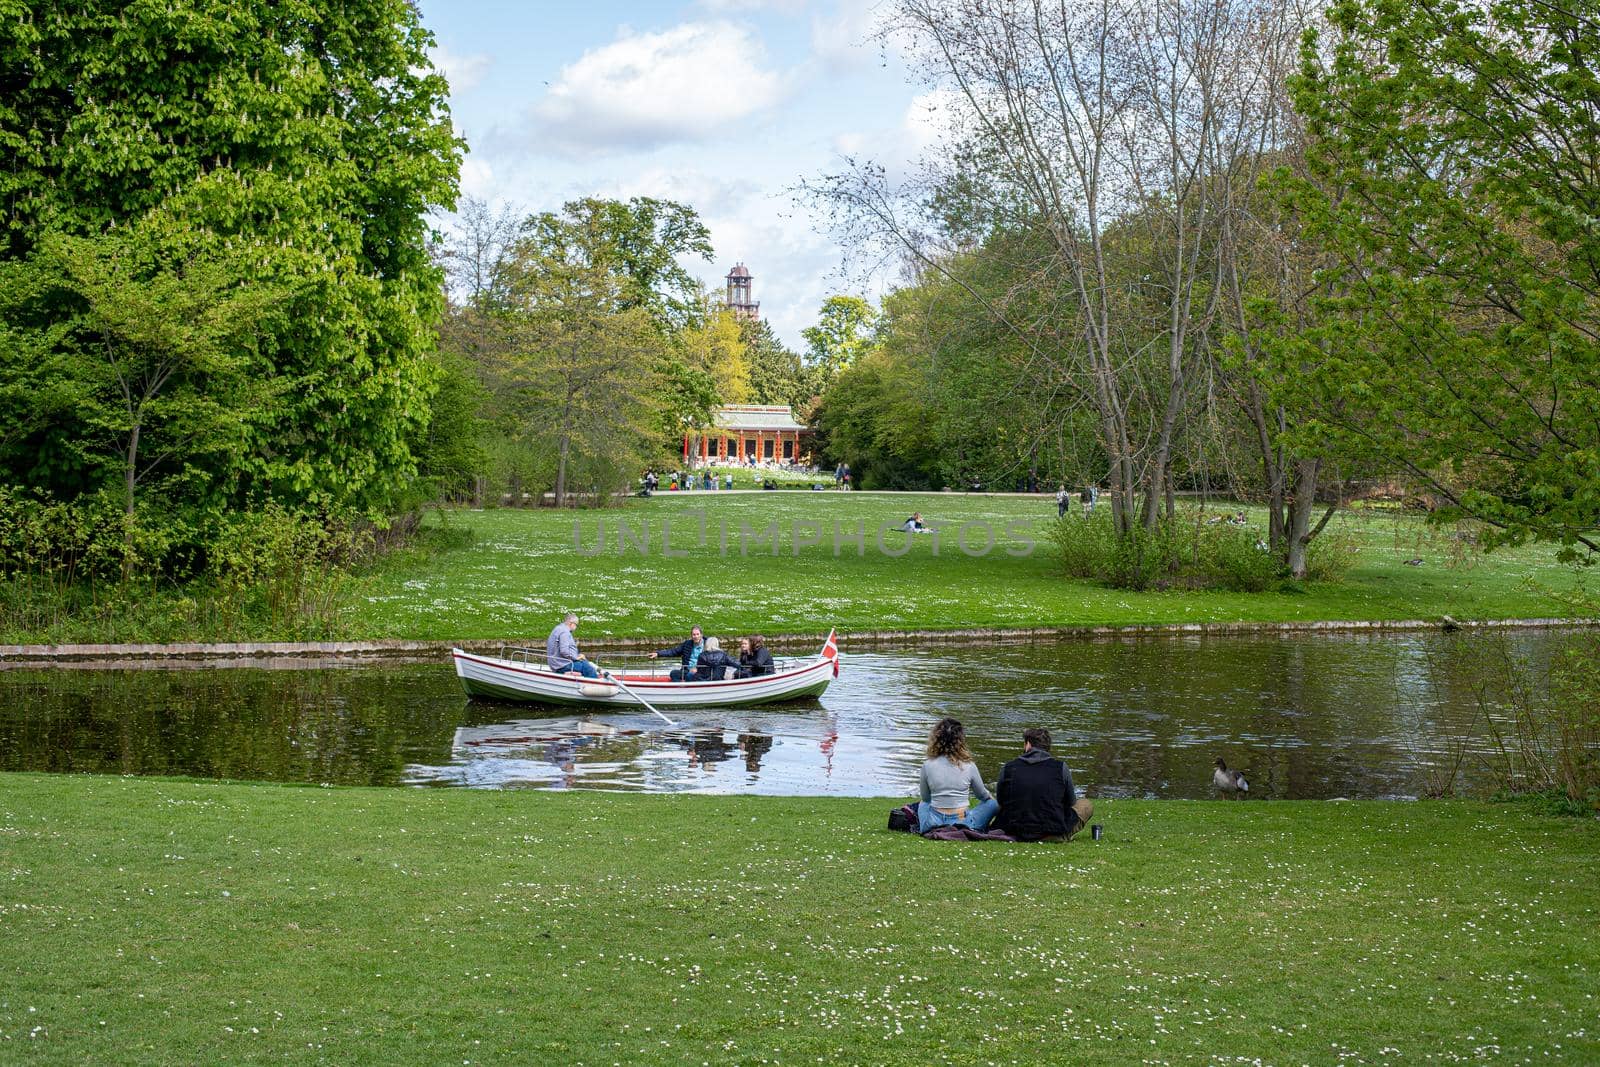 Frederiksberg Gardens in Copenhagen by oliverfoerstner